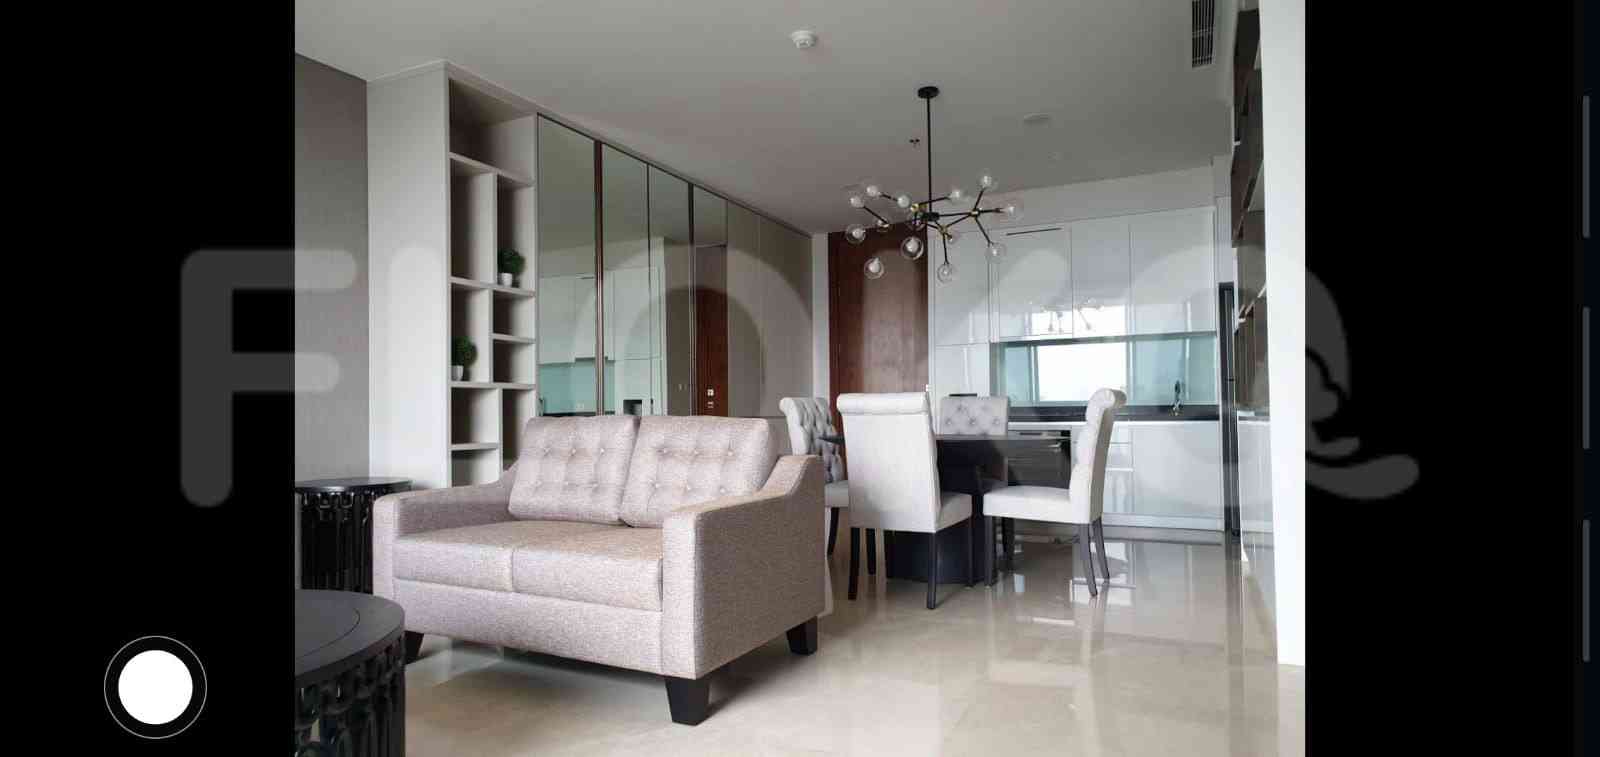 2 Bedroom on 12th Floor for Rent in The Elements Kuningan Apartment - fku654 1